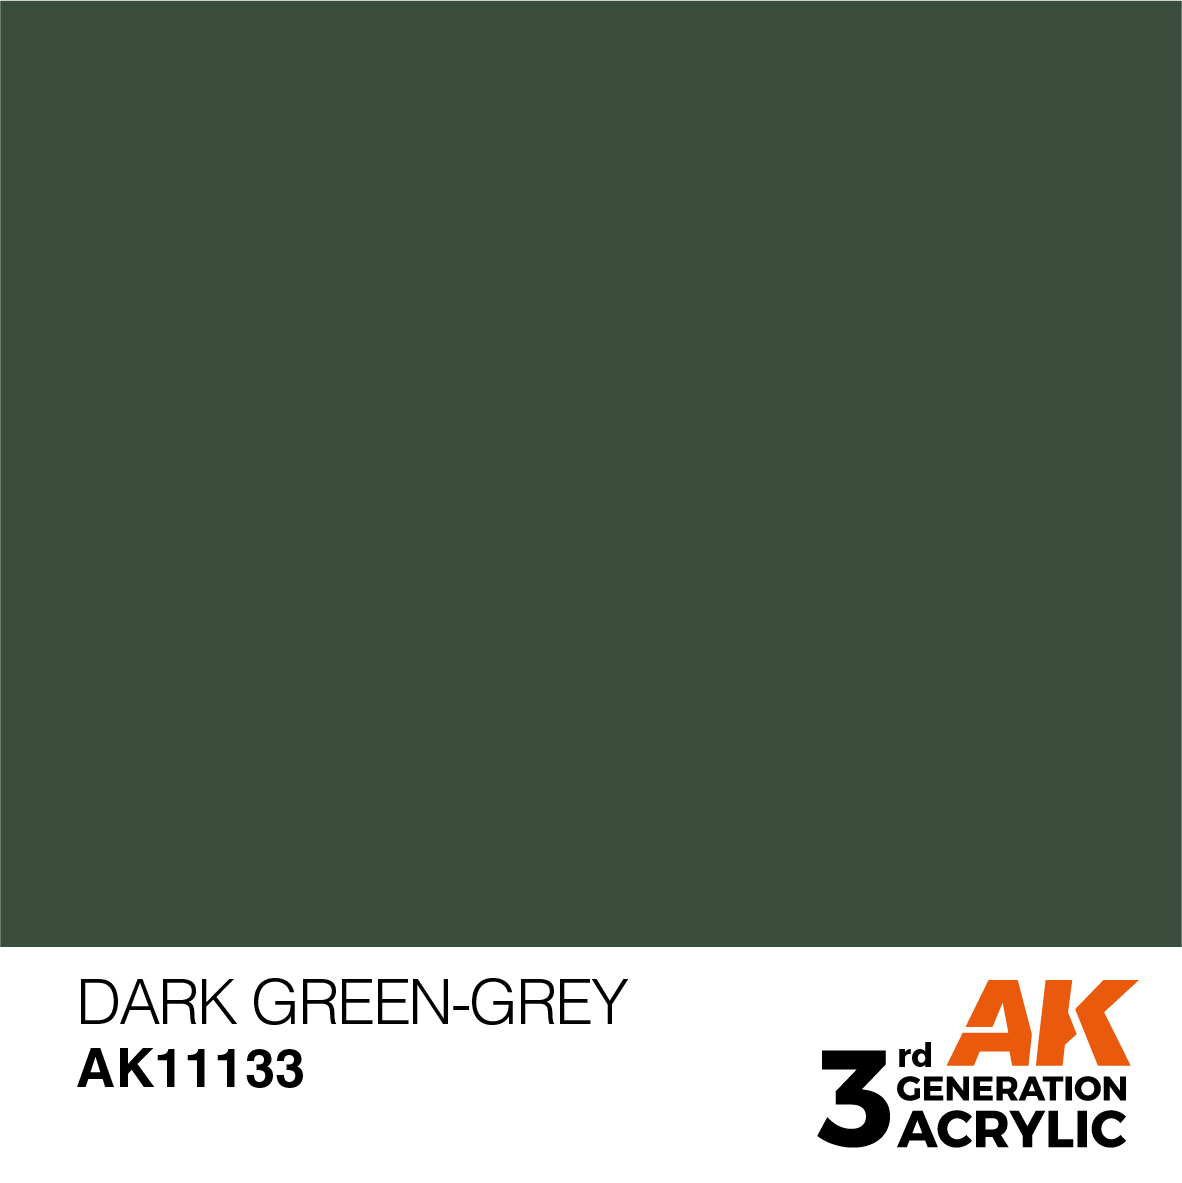 DARK GREEN-GREY – STANDARD